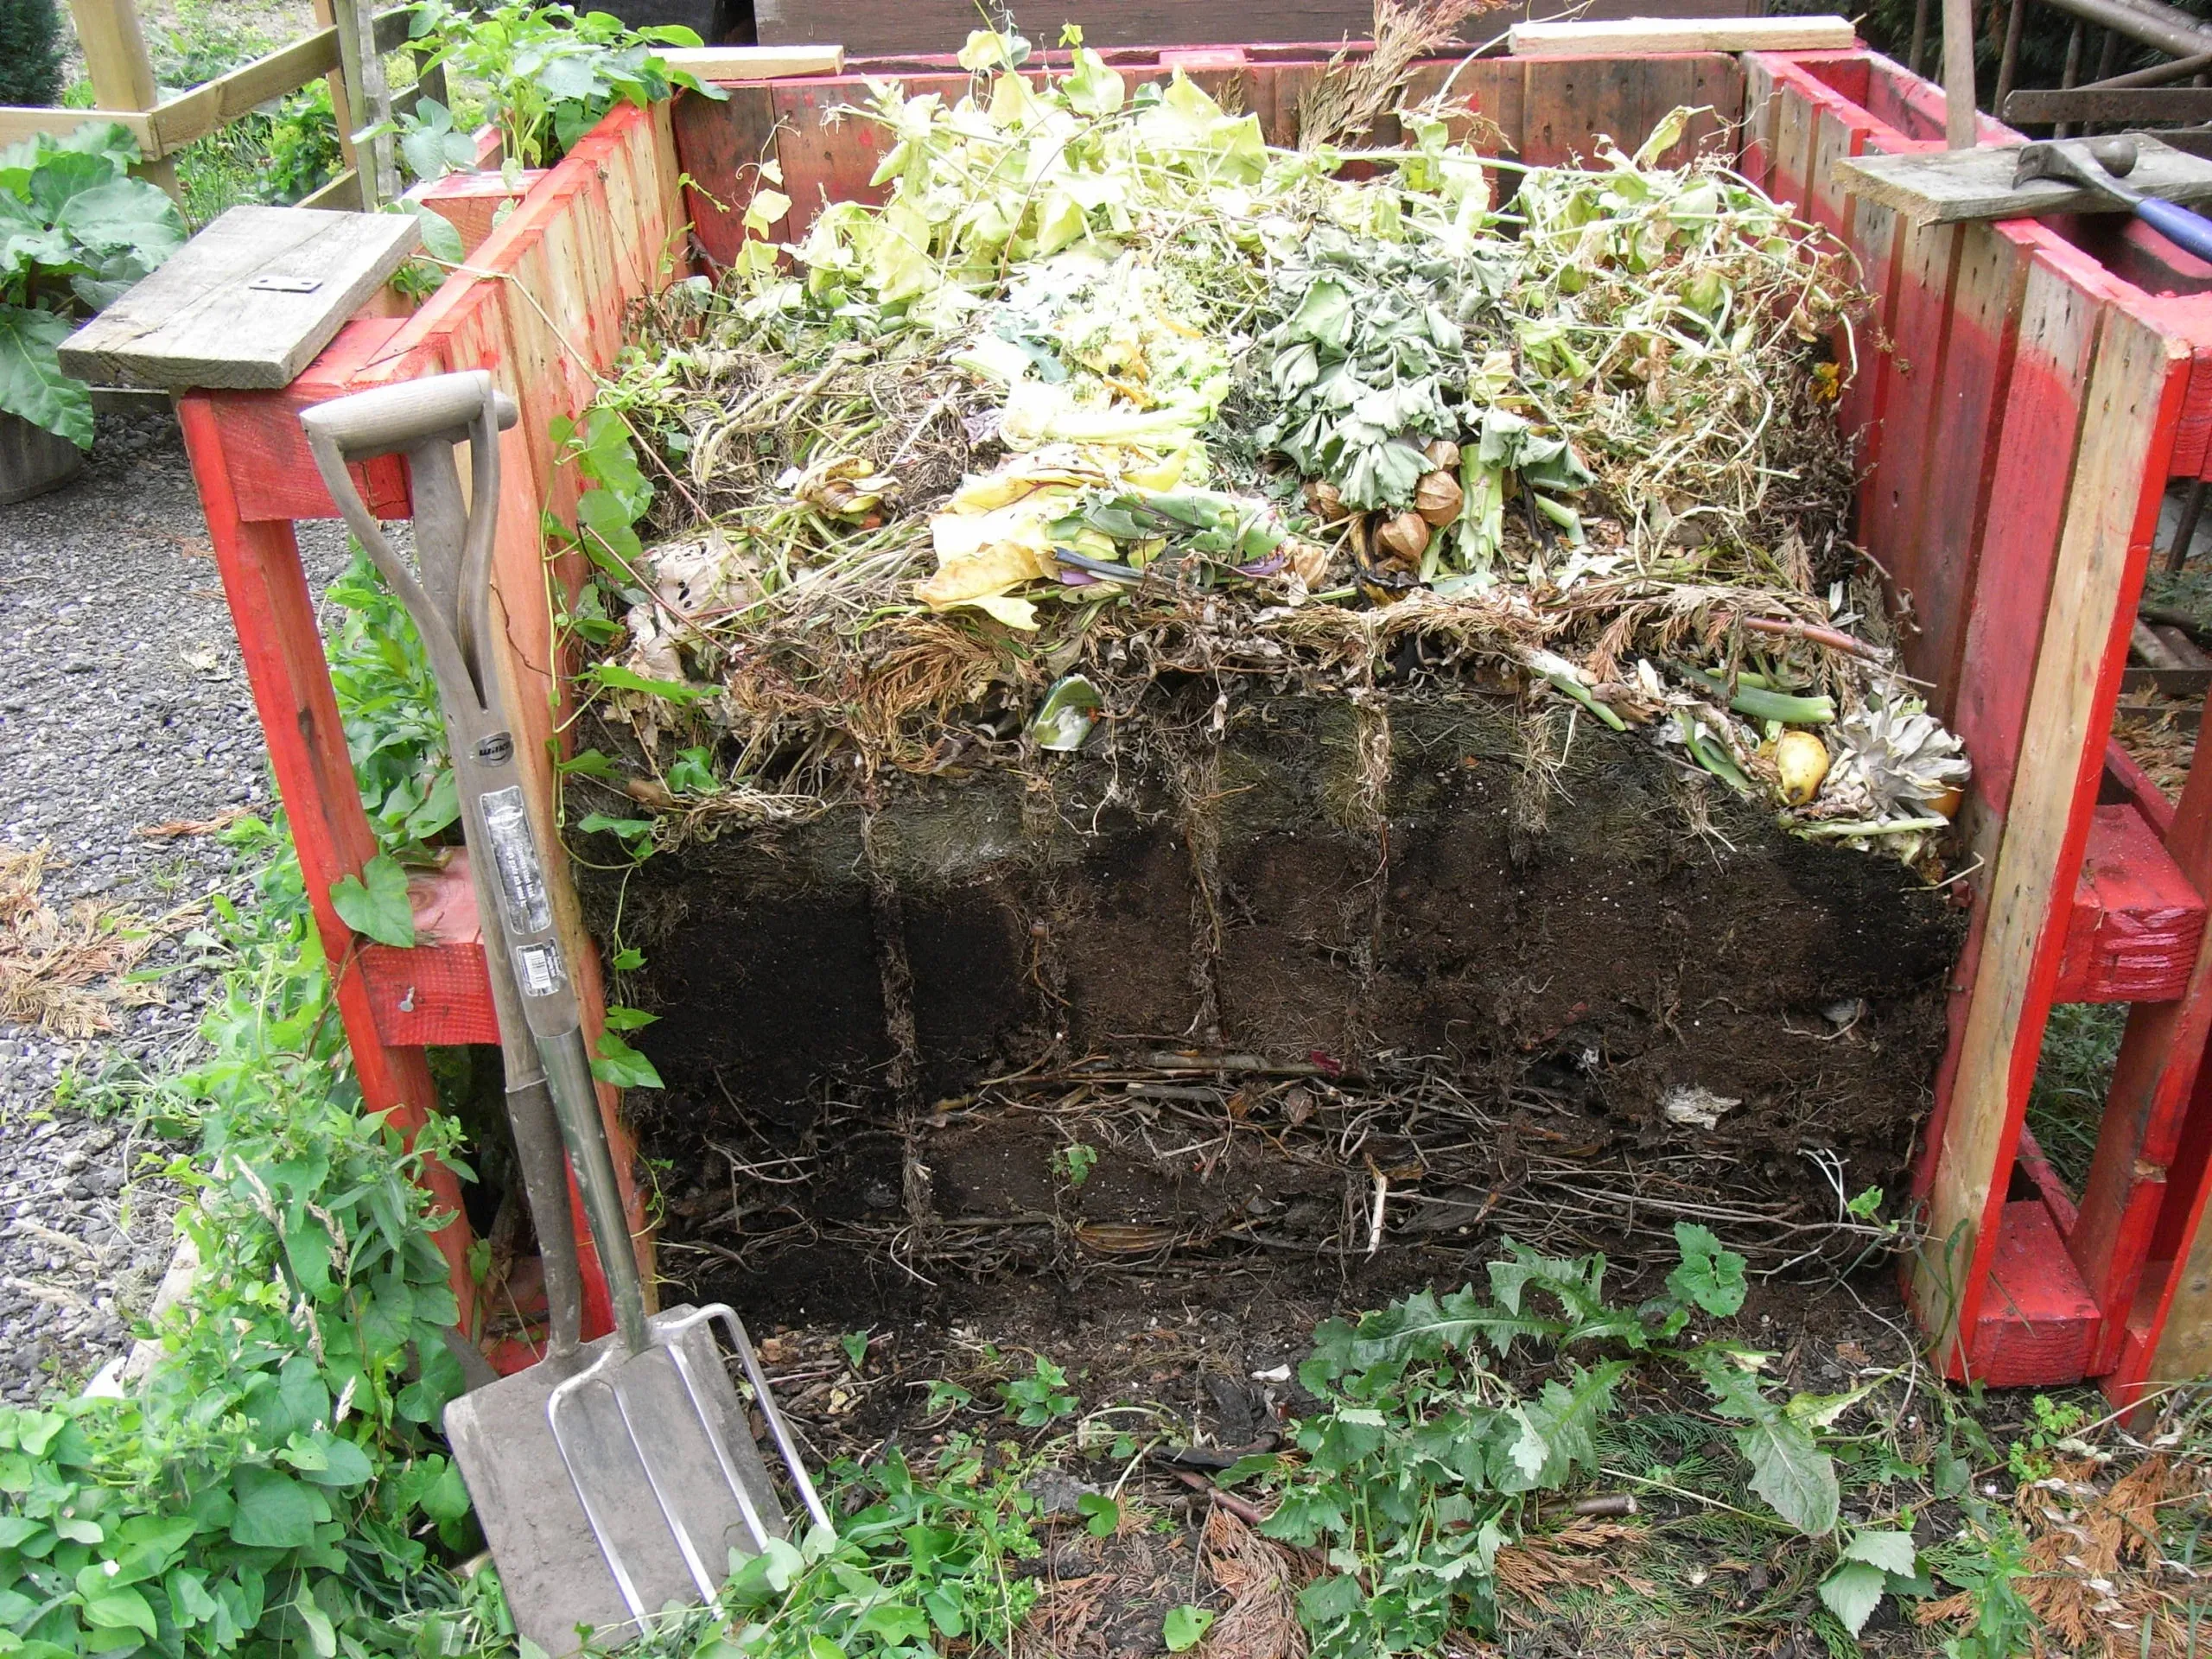 Cheap & Easy DIY Compost Bin - Our First Homestead